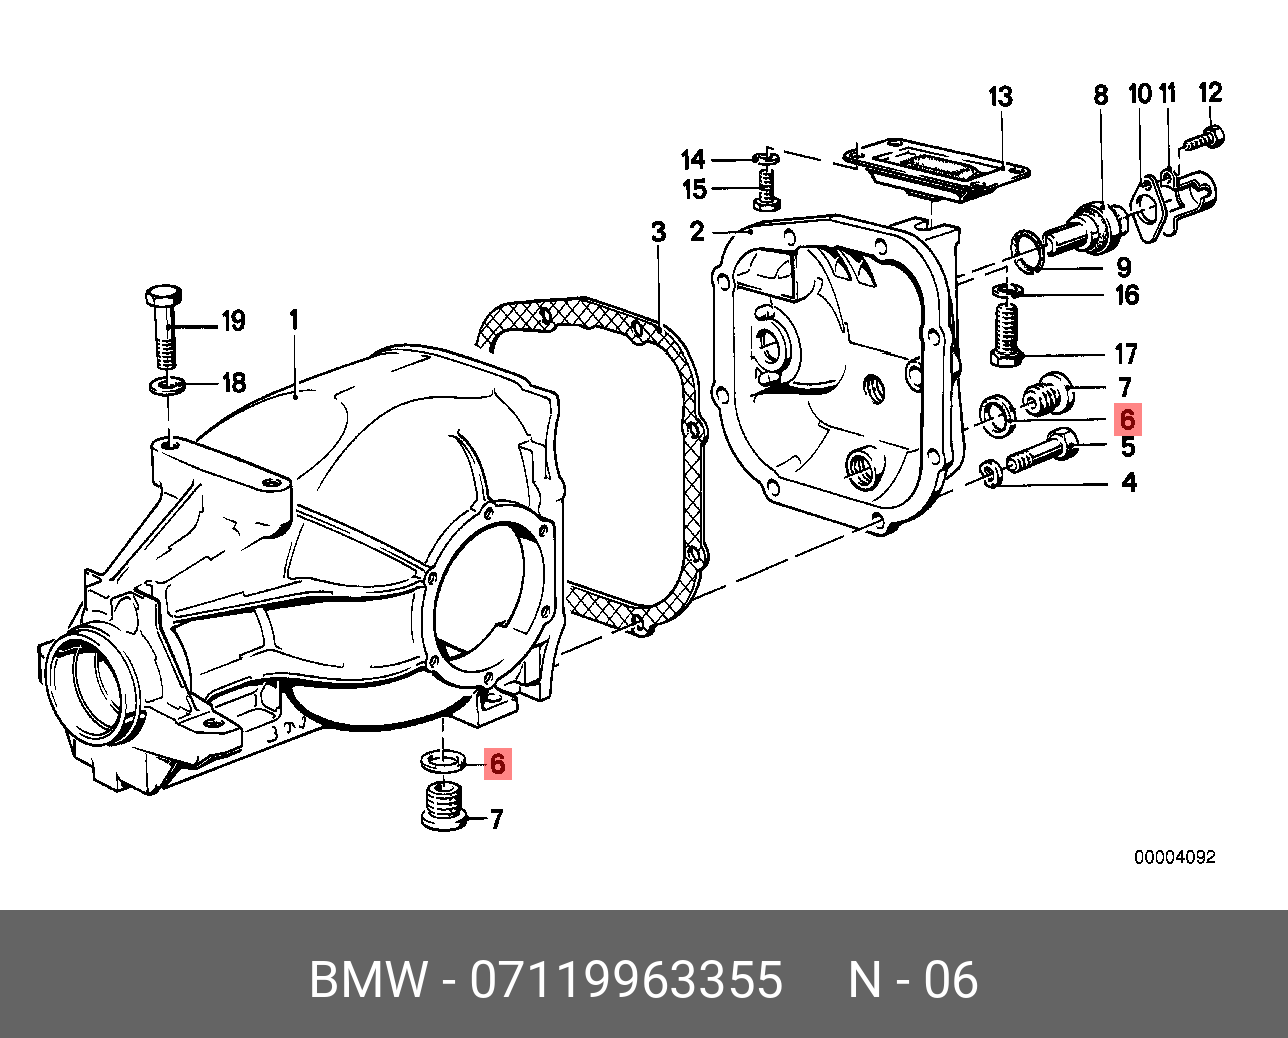 Прокладка сливной пробки поддона двигателя   BMW арт. 07119963355